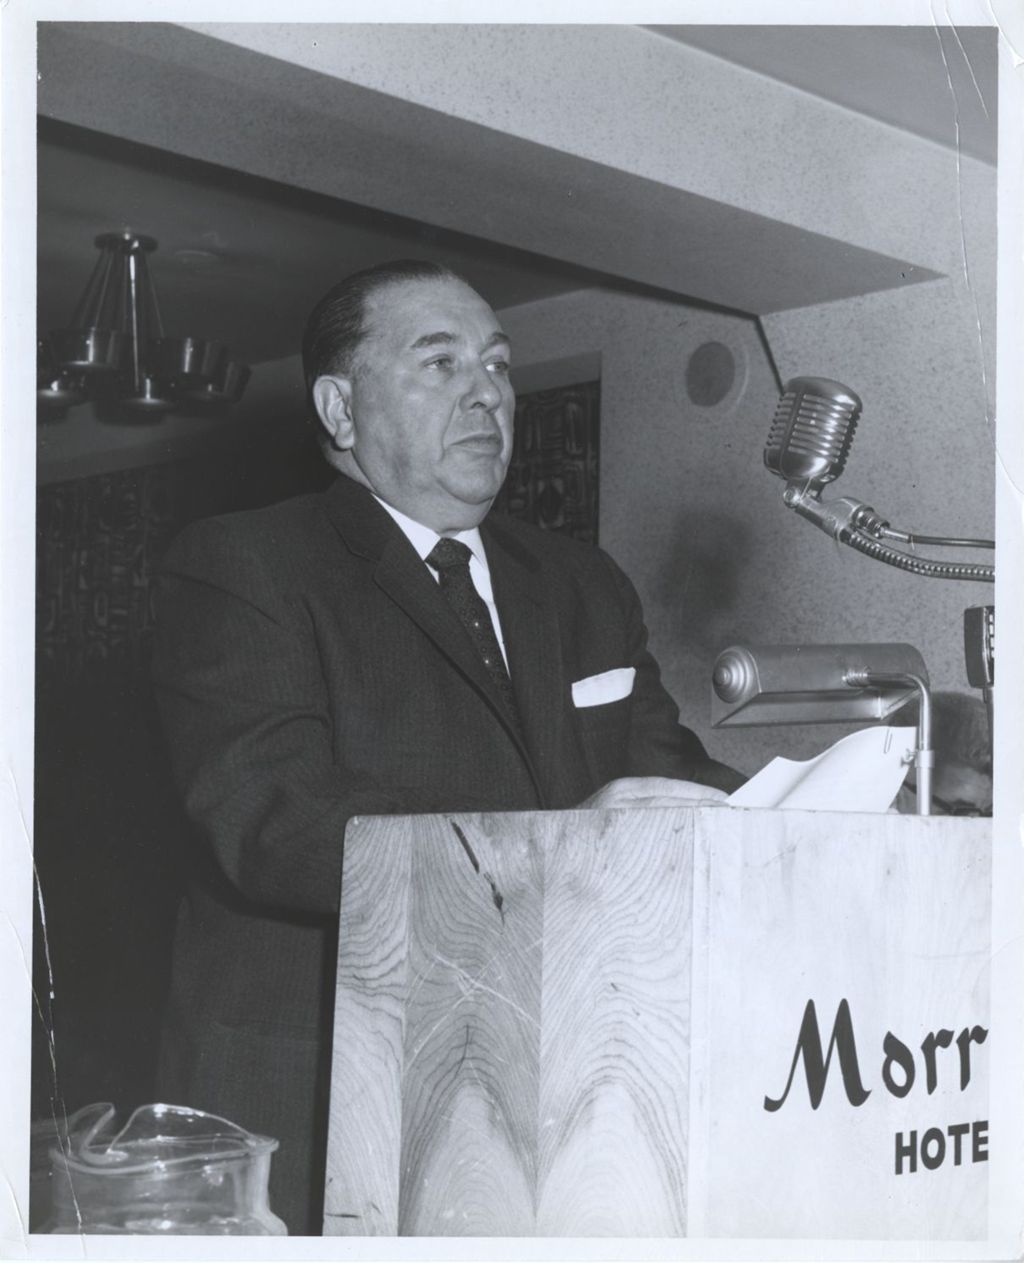 Miniature of Richard J. Daley speaking at a podium